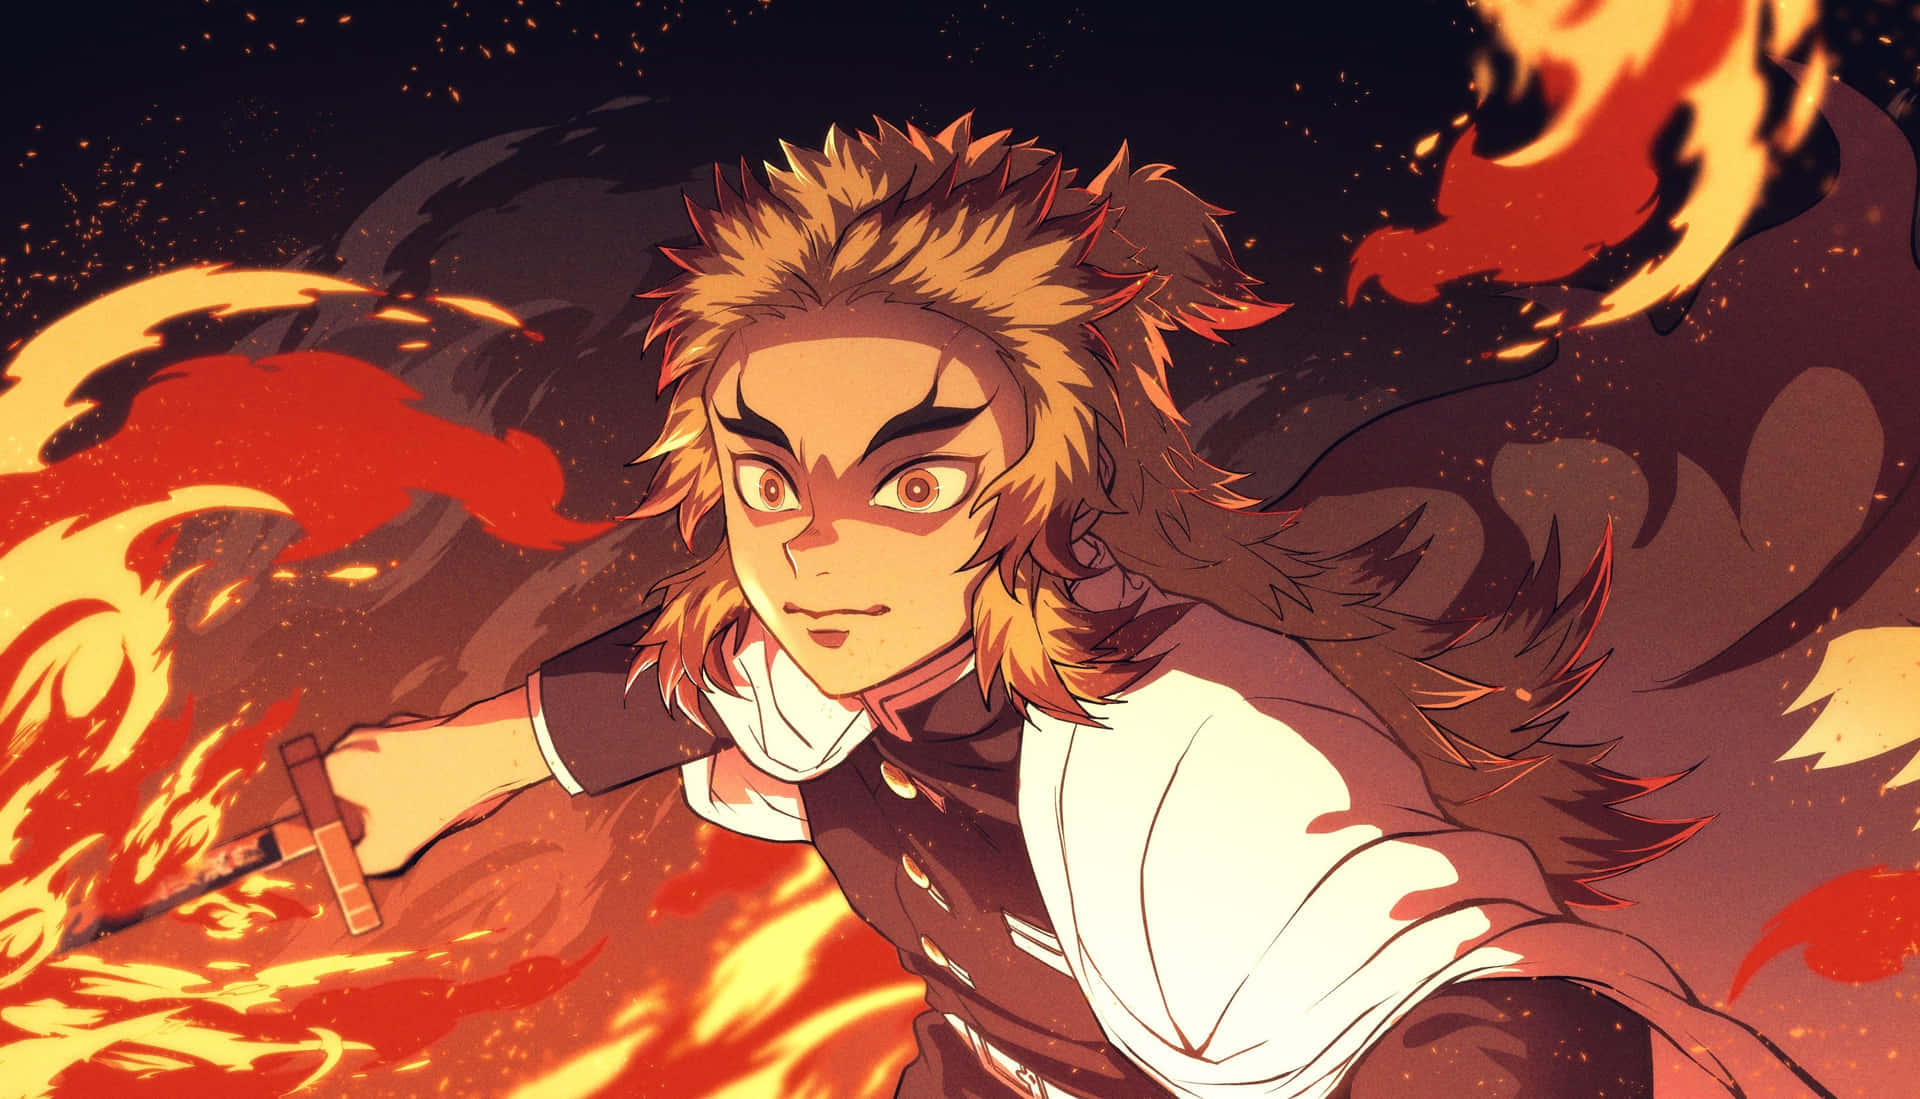 Flaming Warrior Anime Art Wallpaper